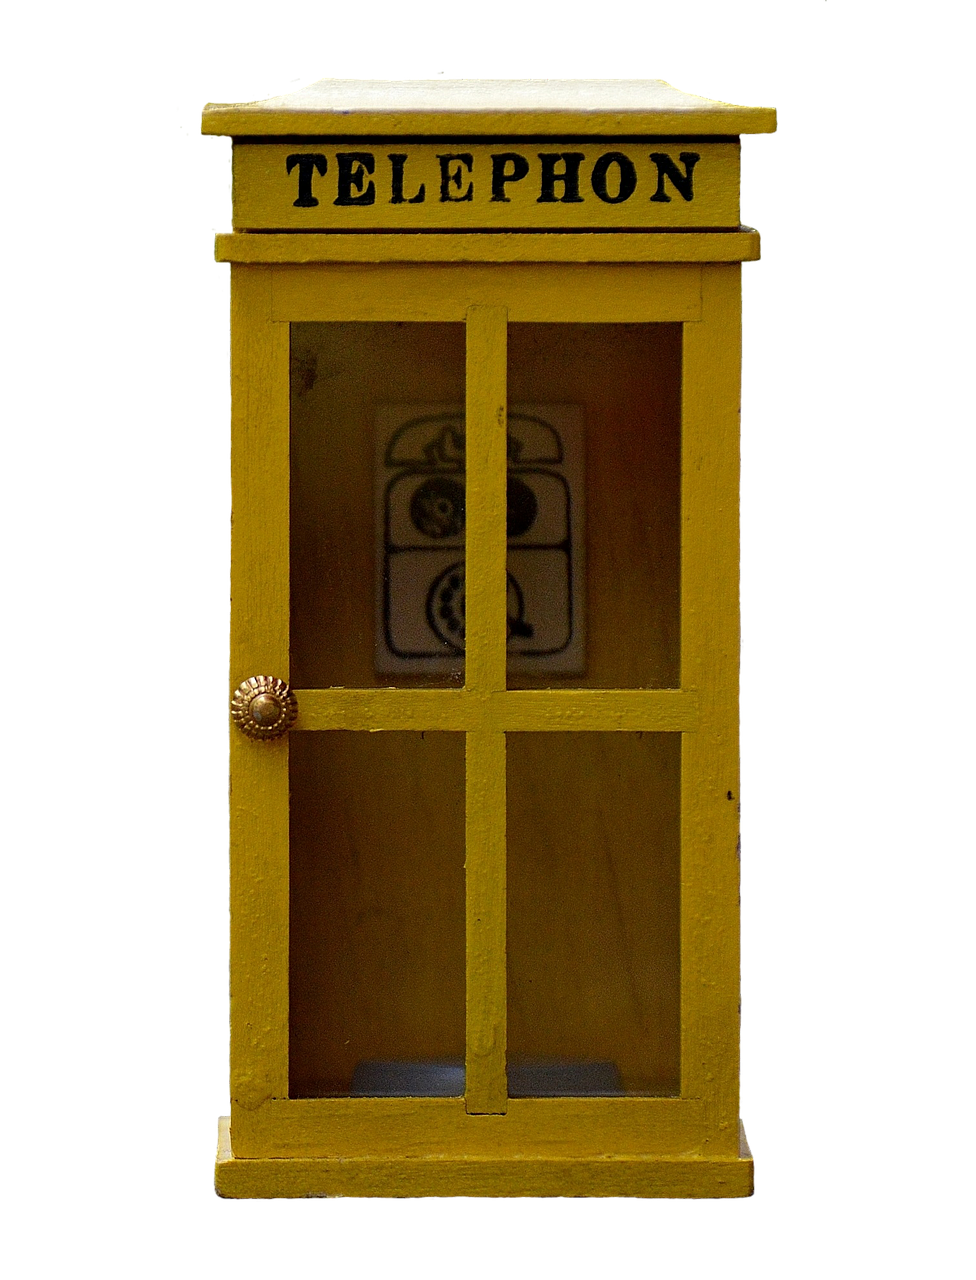 phone booth call phone free photo